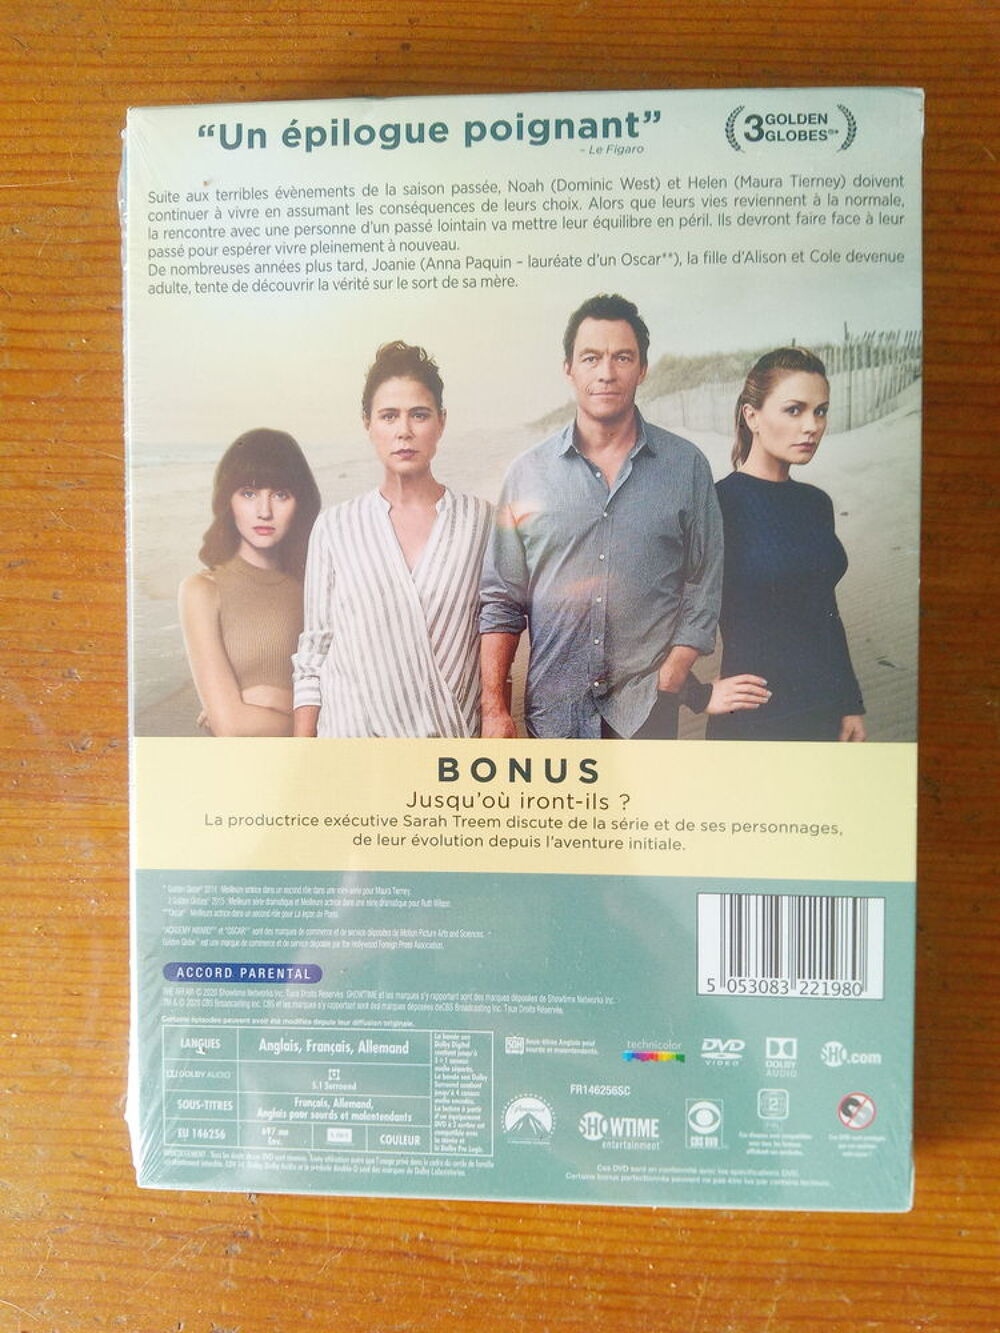 Coffret 4 DVD The Affair L'ultime saison (Neuf) DVD et blu-ray